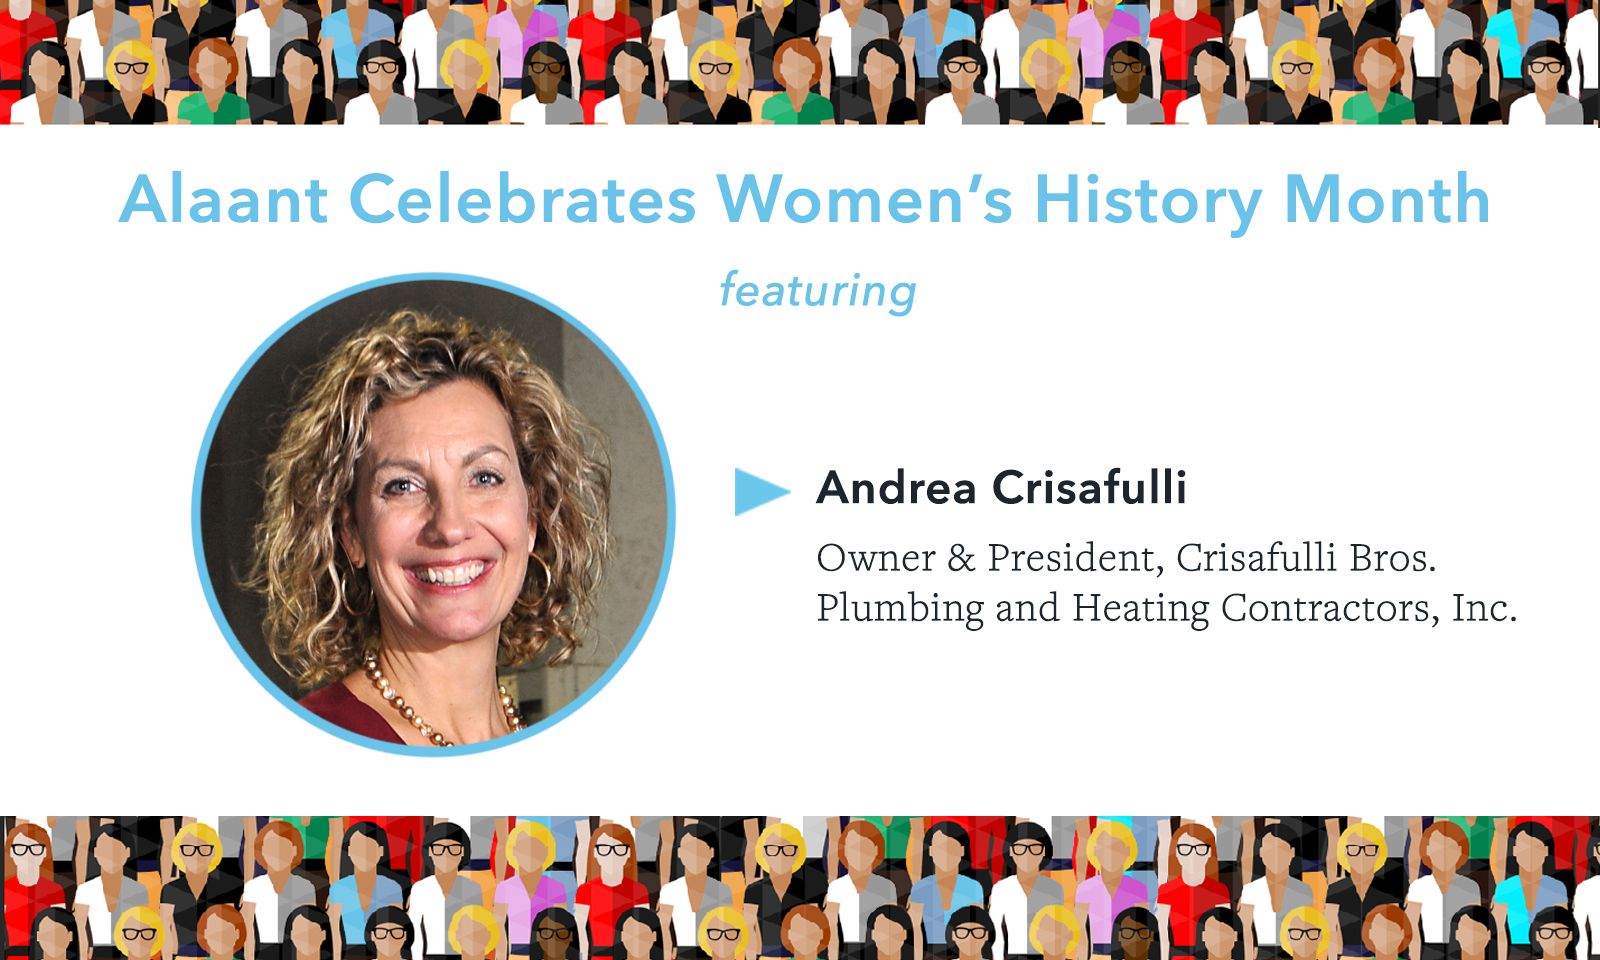 Alaant Celebrates Women’s History Month with Andrea Crisafulli